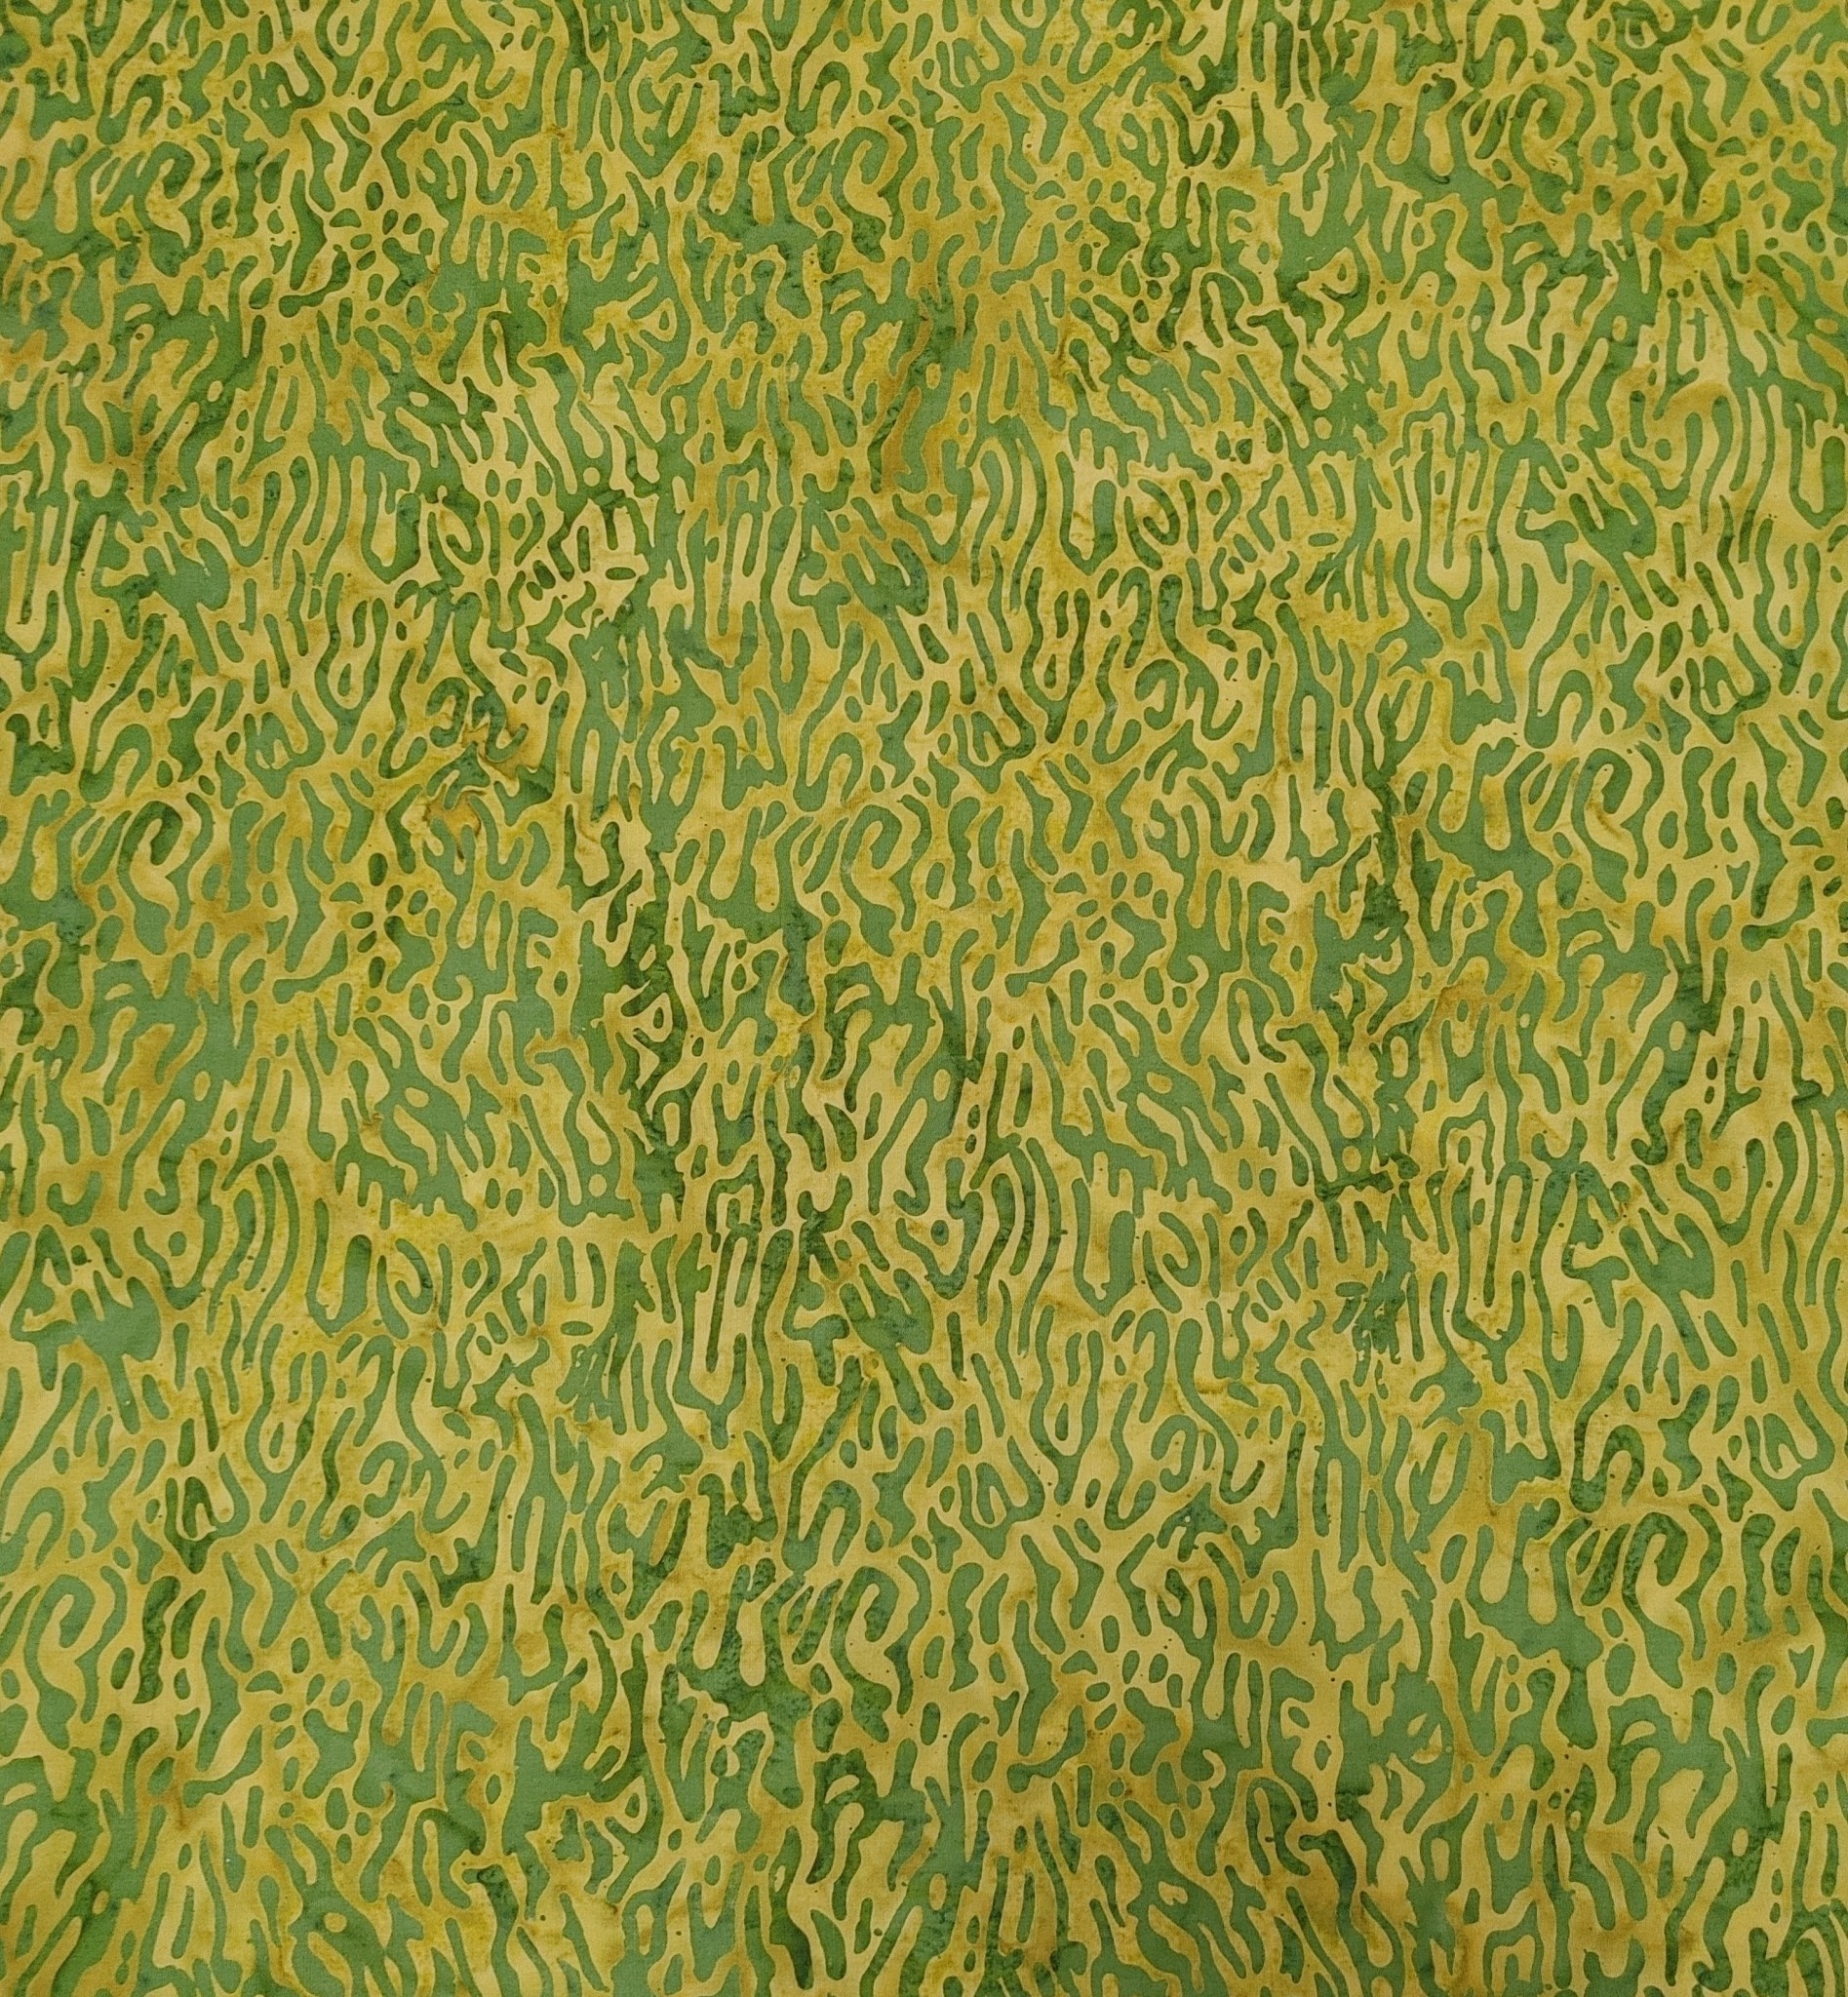 Mirah Zriya Batik by Mirah Nova Terra, Ripple Green NT-5-5732 $0.16 per cm or $16/m